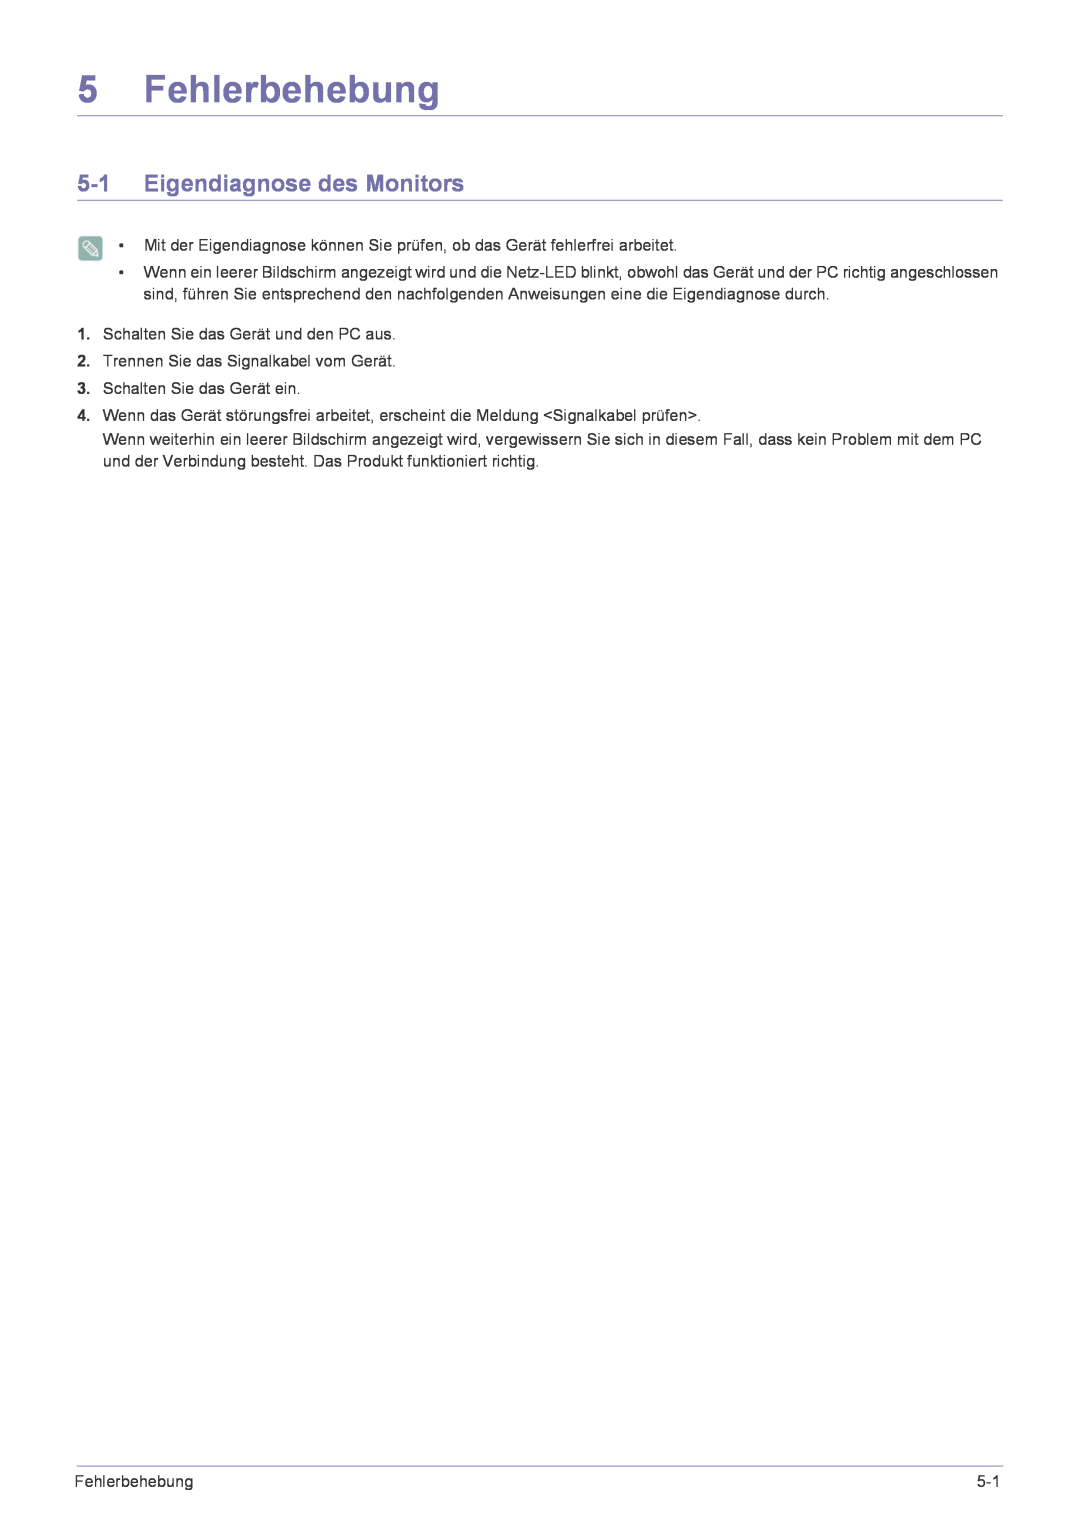 Samsung LF22NPBHBNP/EN manual Fehlerbehebung, Eigendiagnose des Monitors 